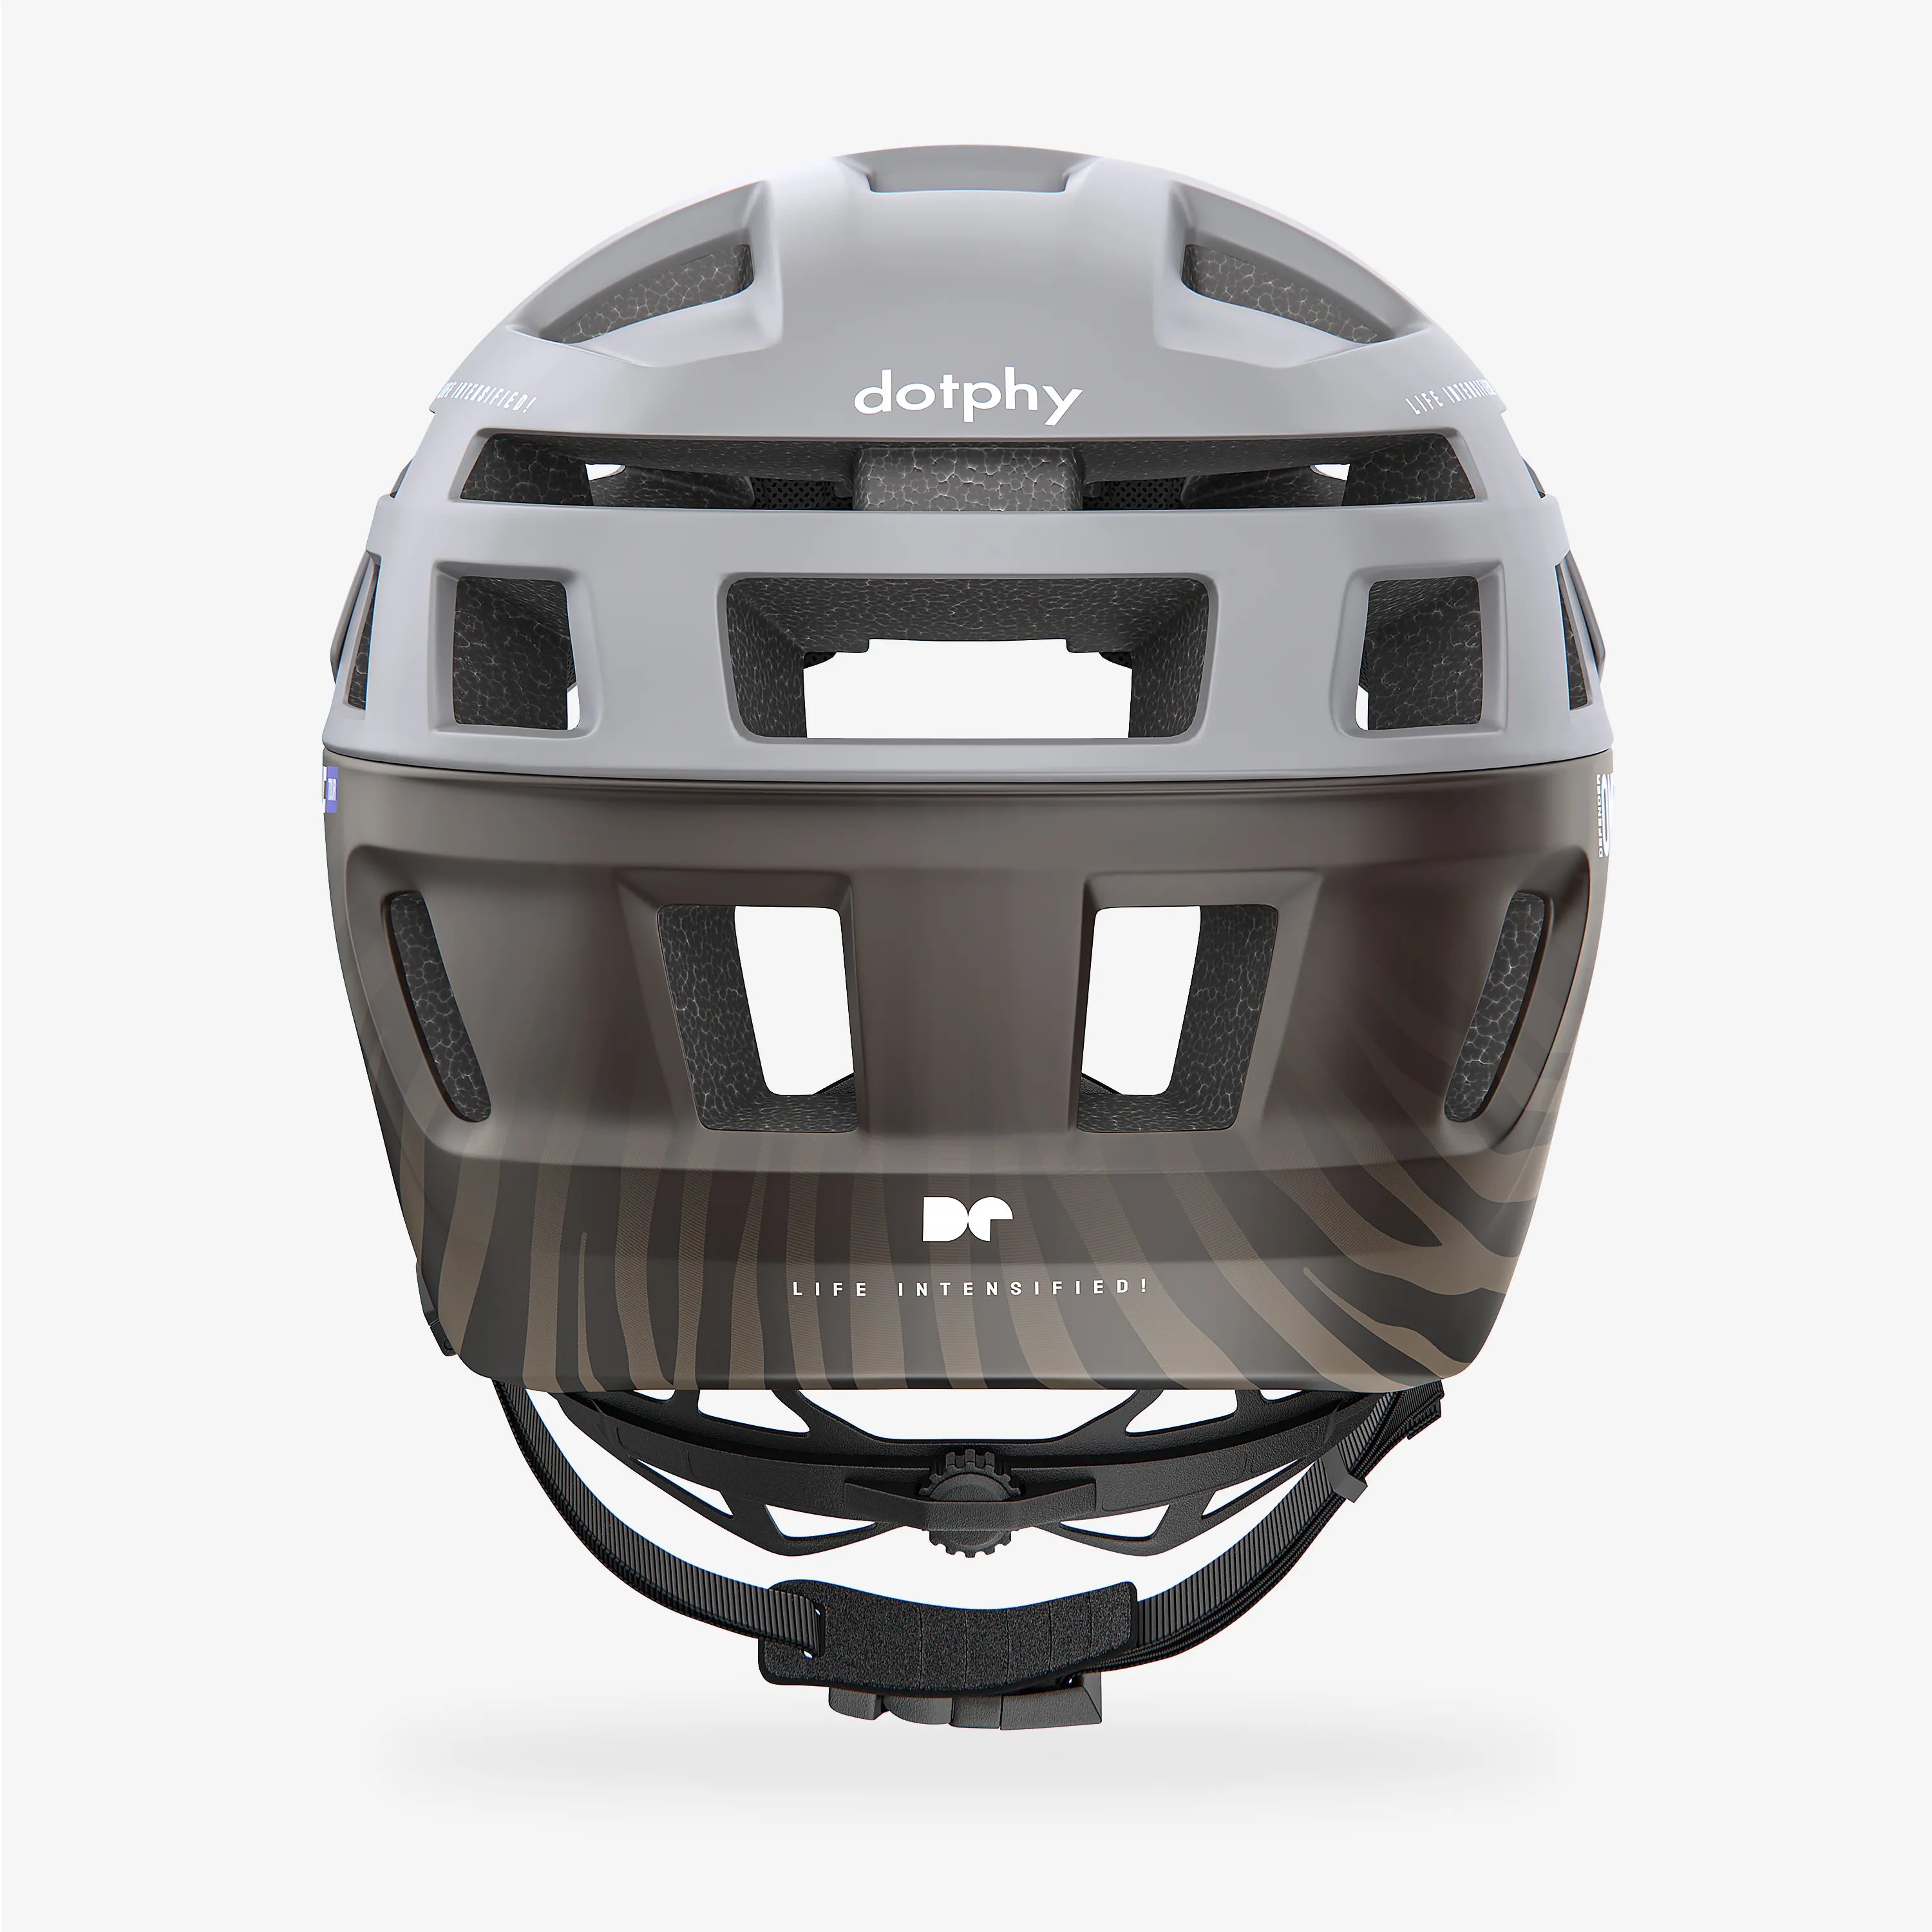 Defender One Tour Nardo Gray Mountain Bike Helmet